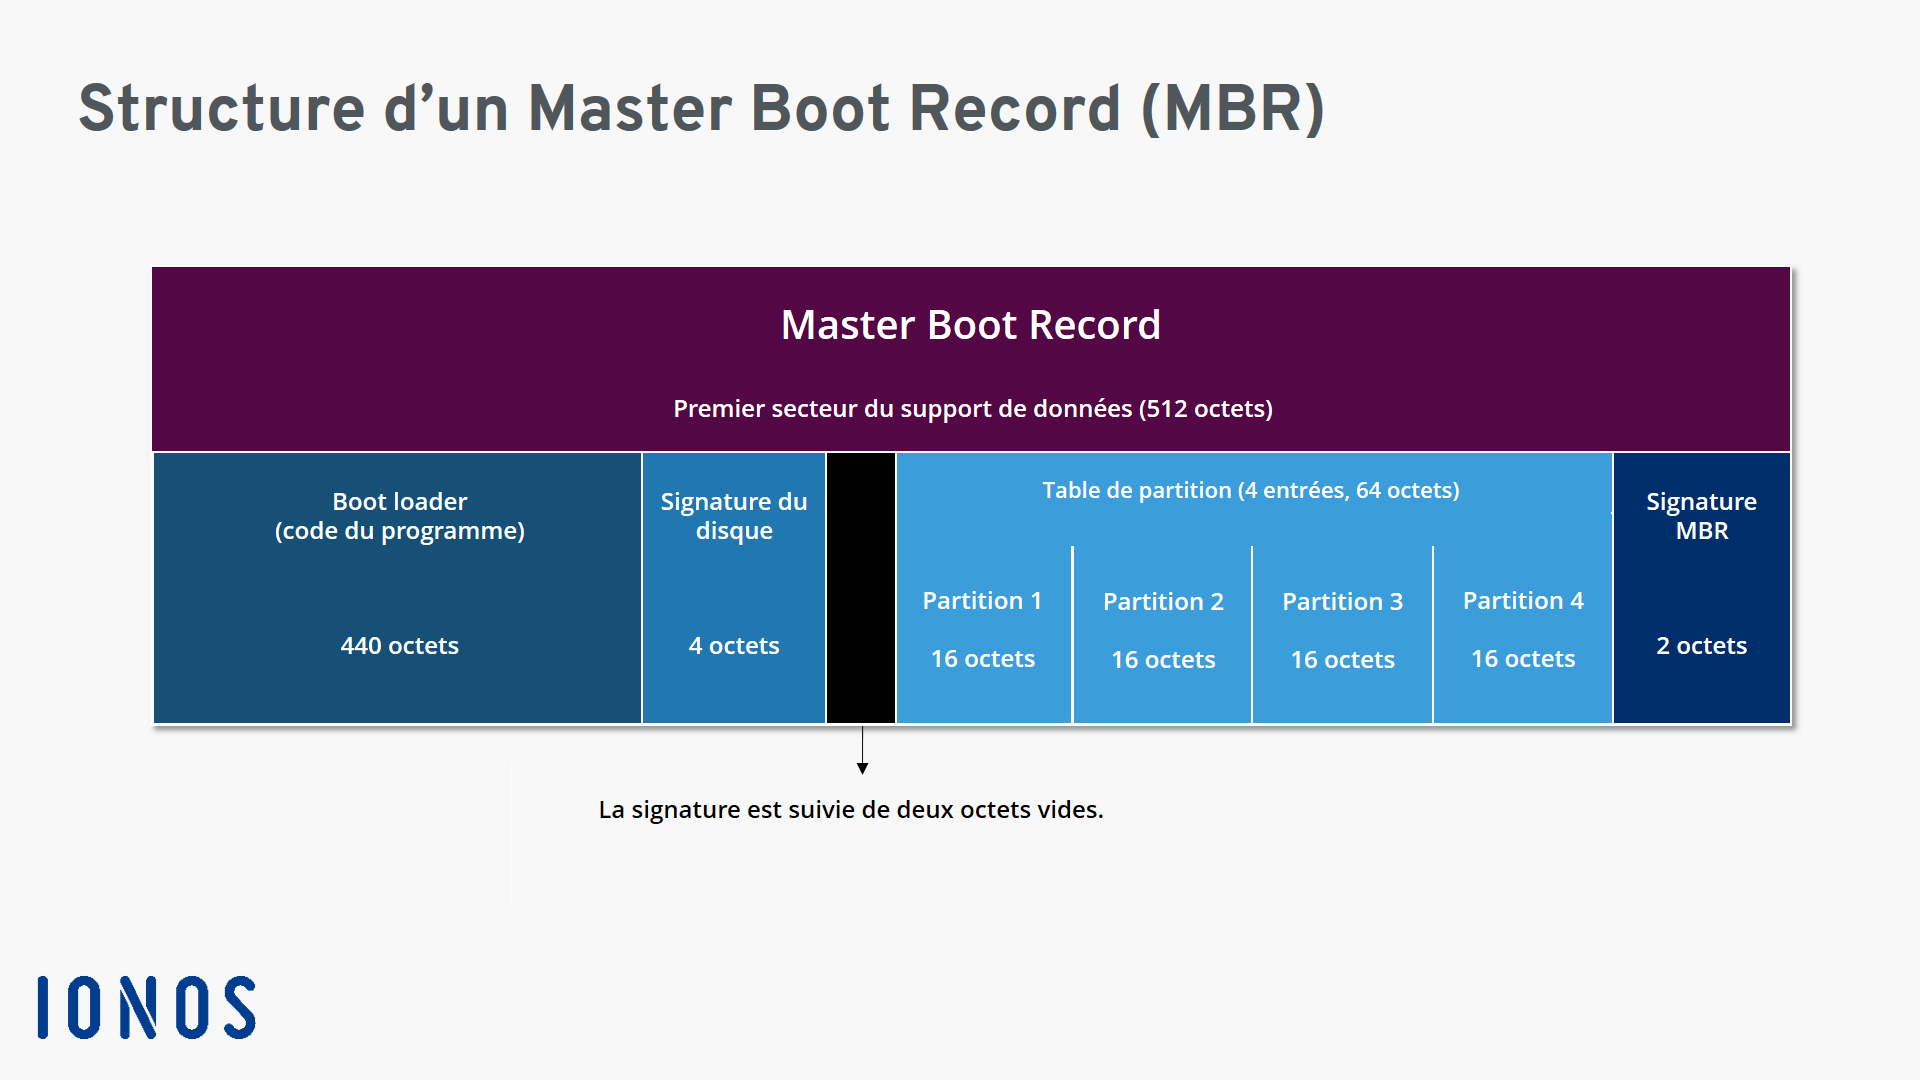 Représentation graphique d’un Master Boot Record